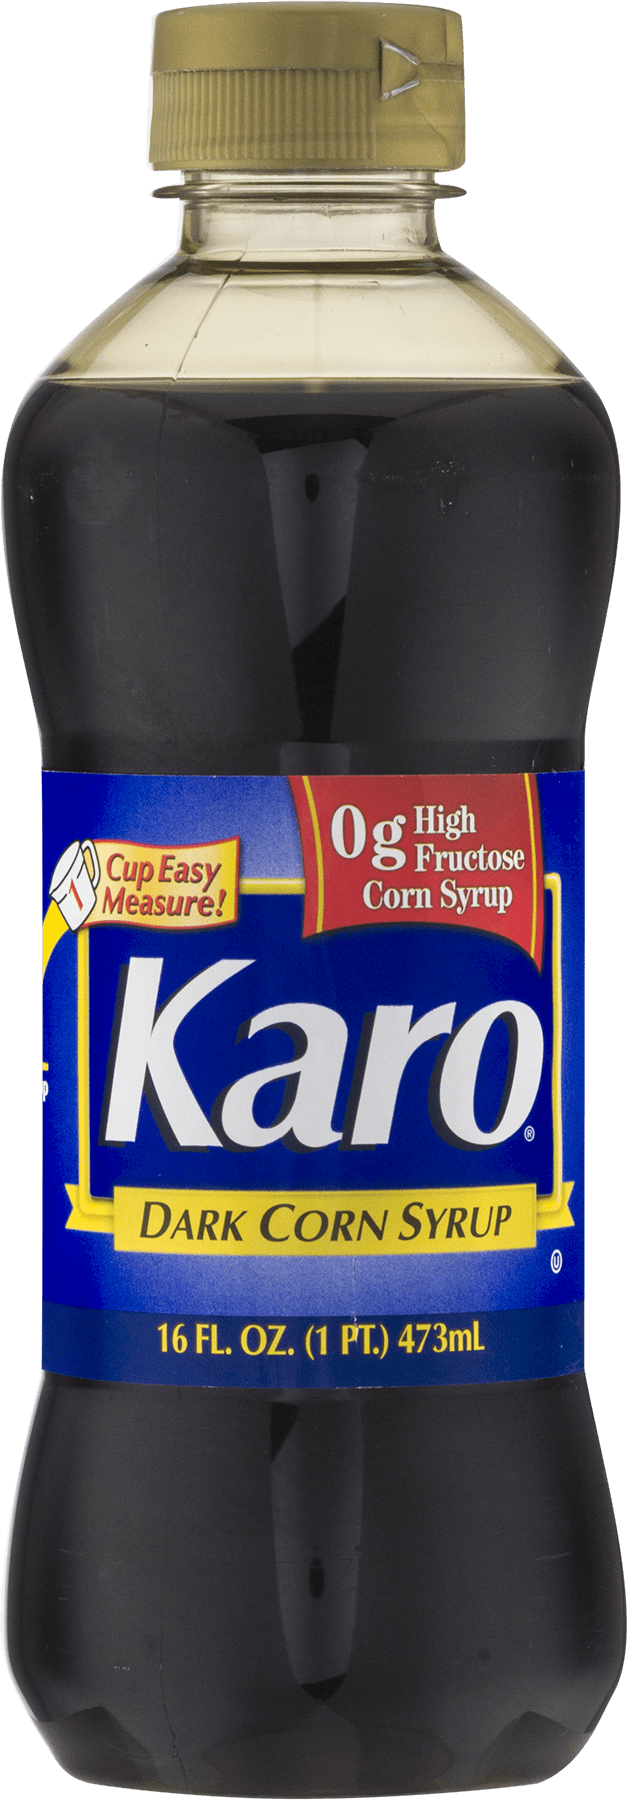 Karo Corn Syrup Dark, 16oz